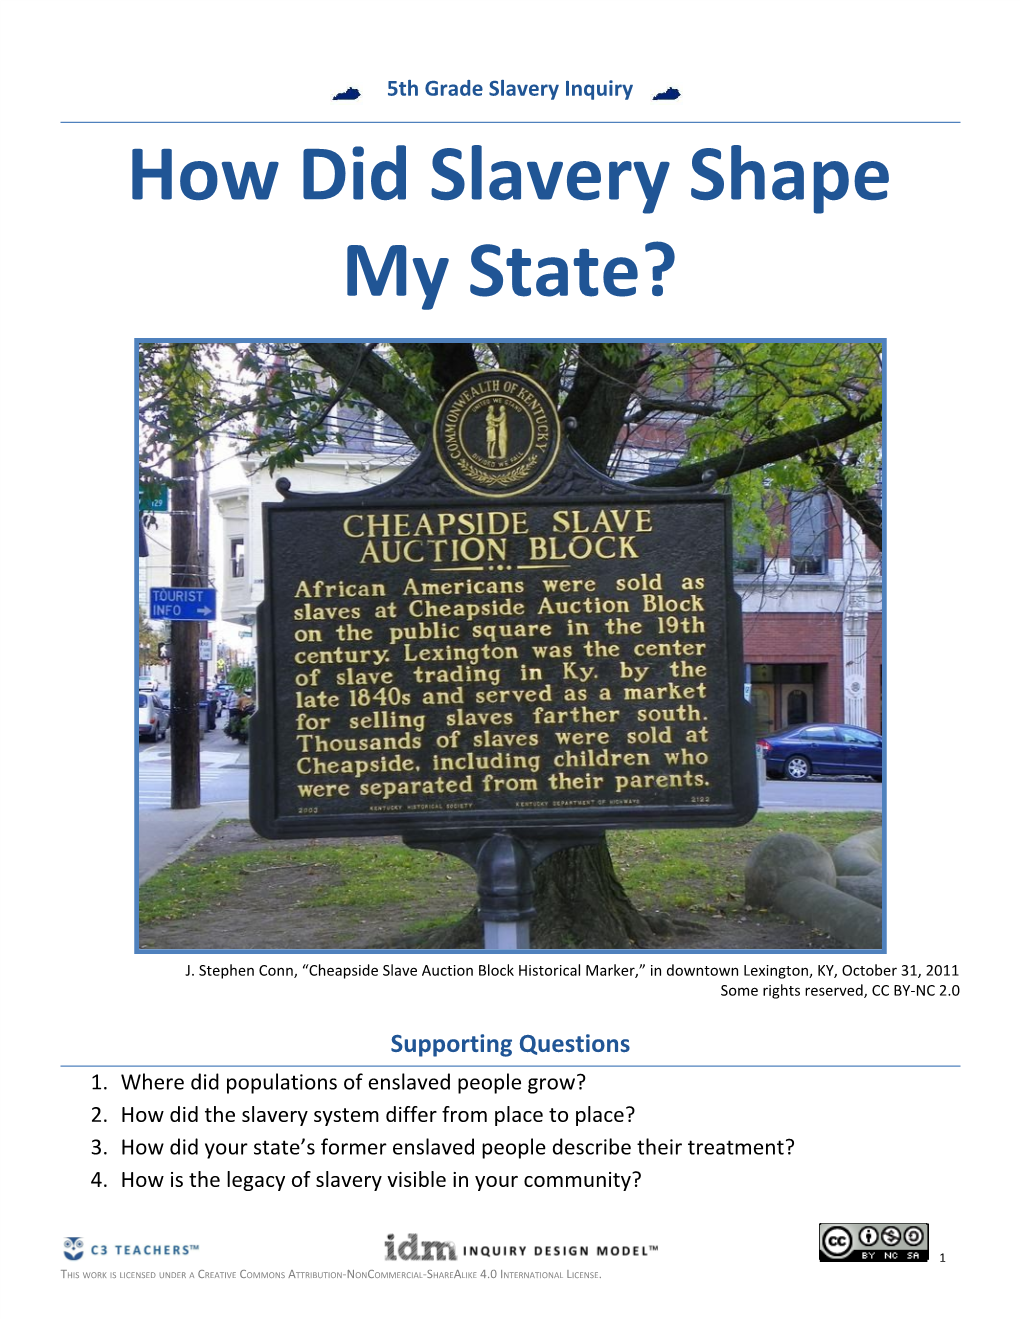 How Did Slavery Shape My State?